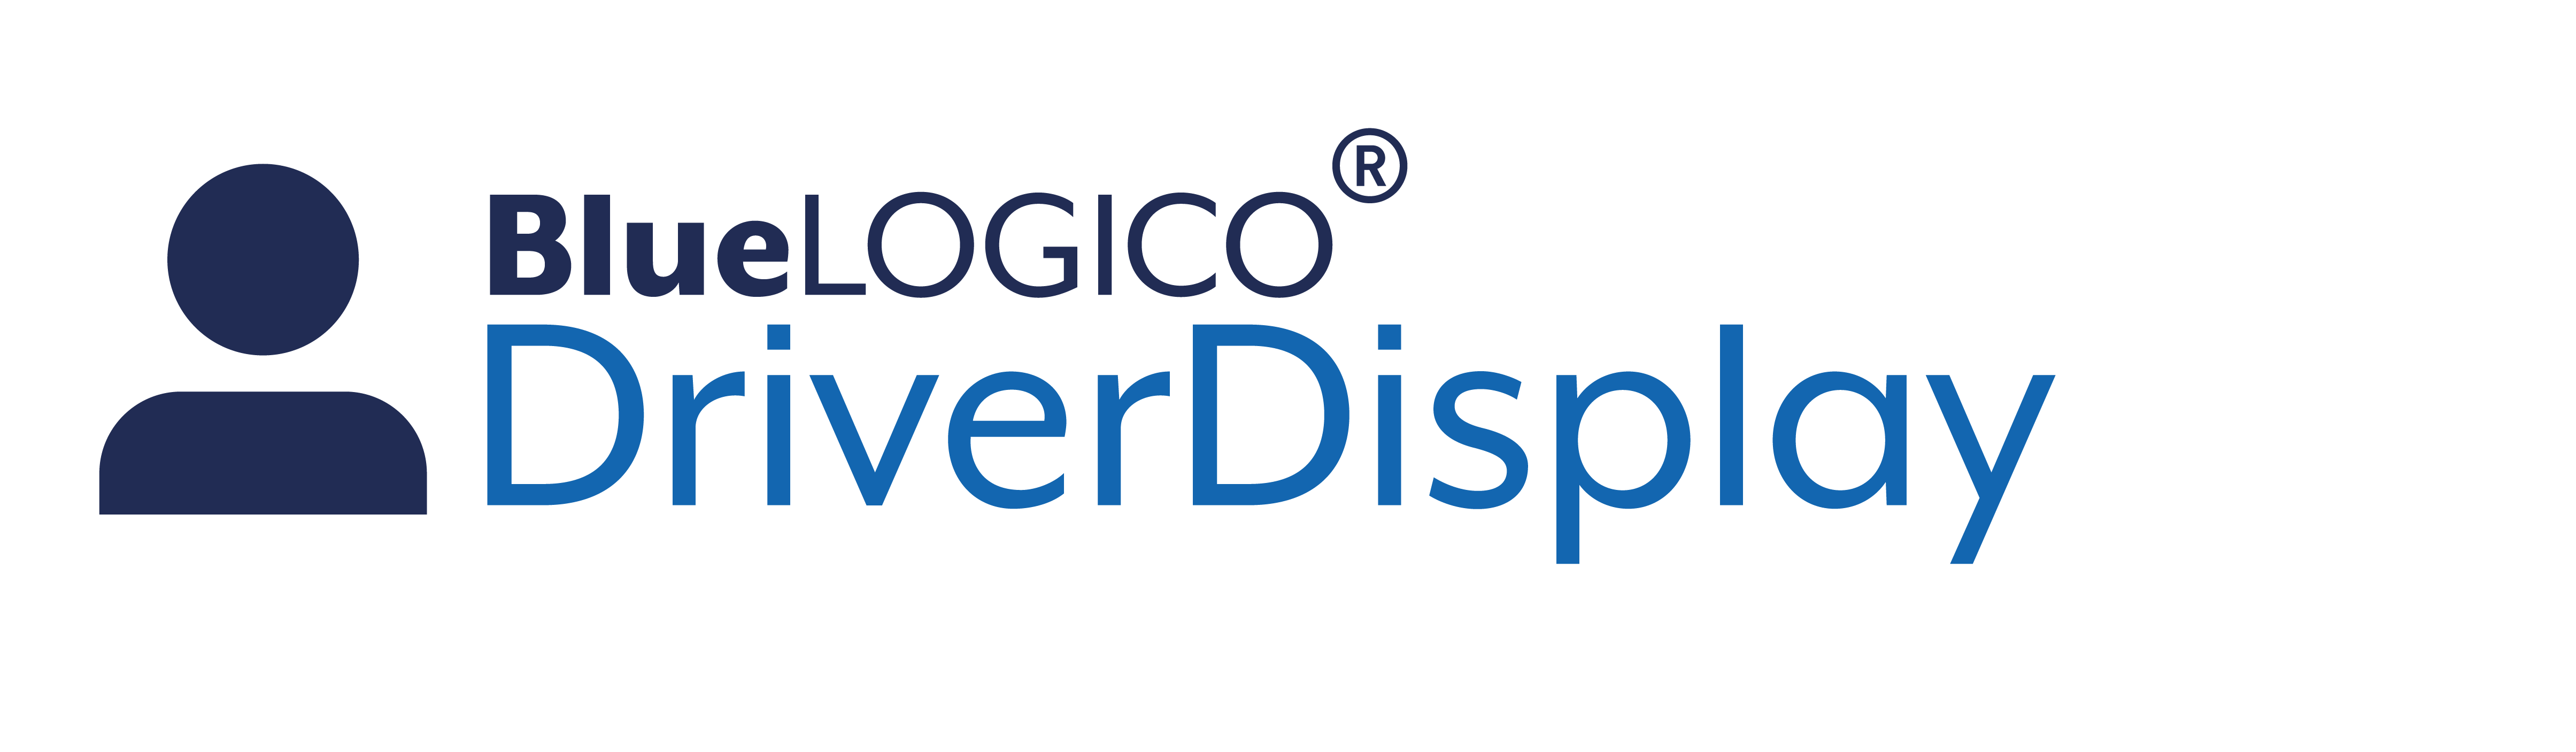 bluelogico driverdisplay logo